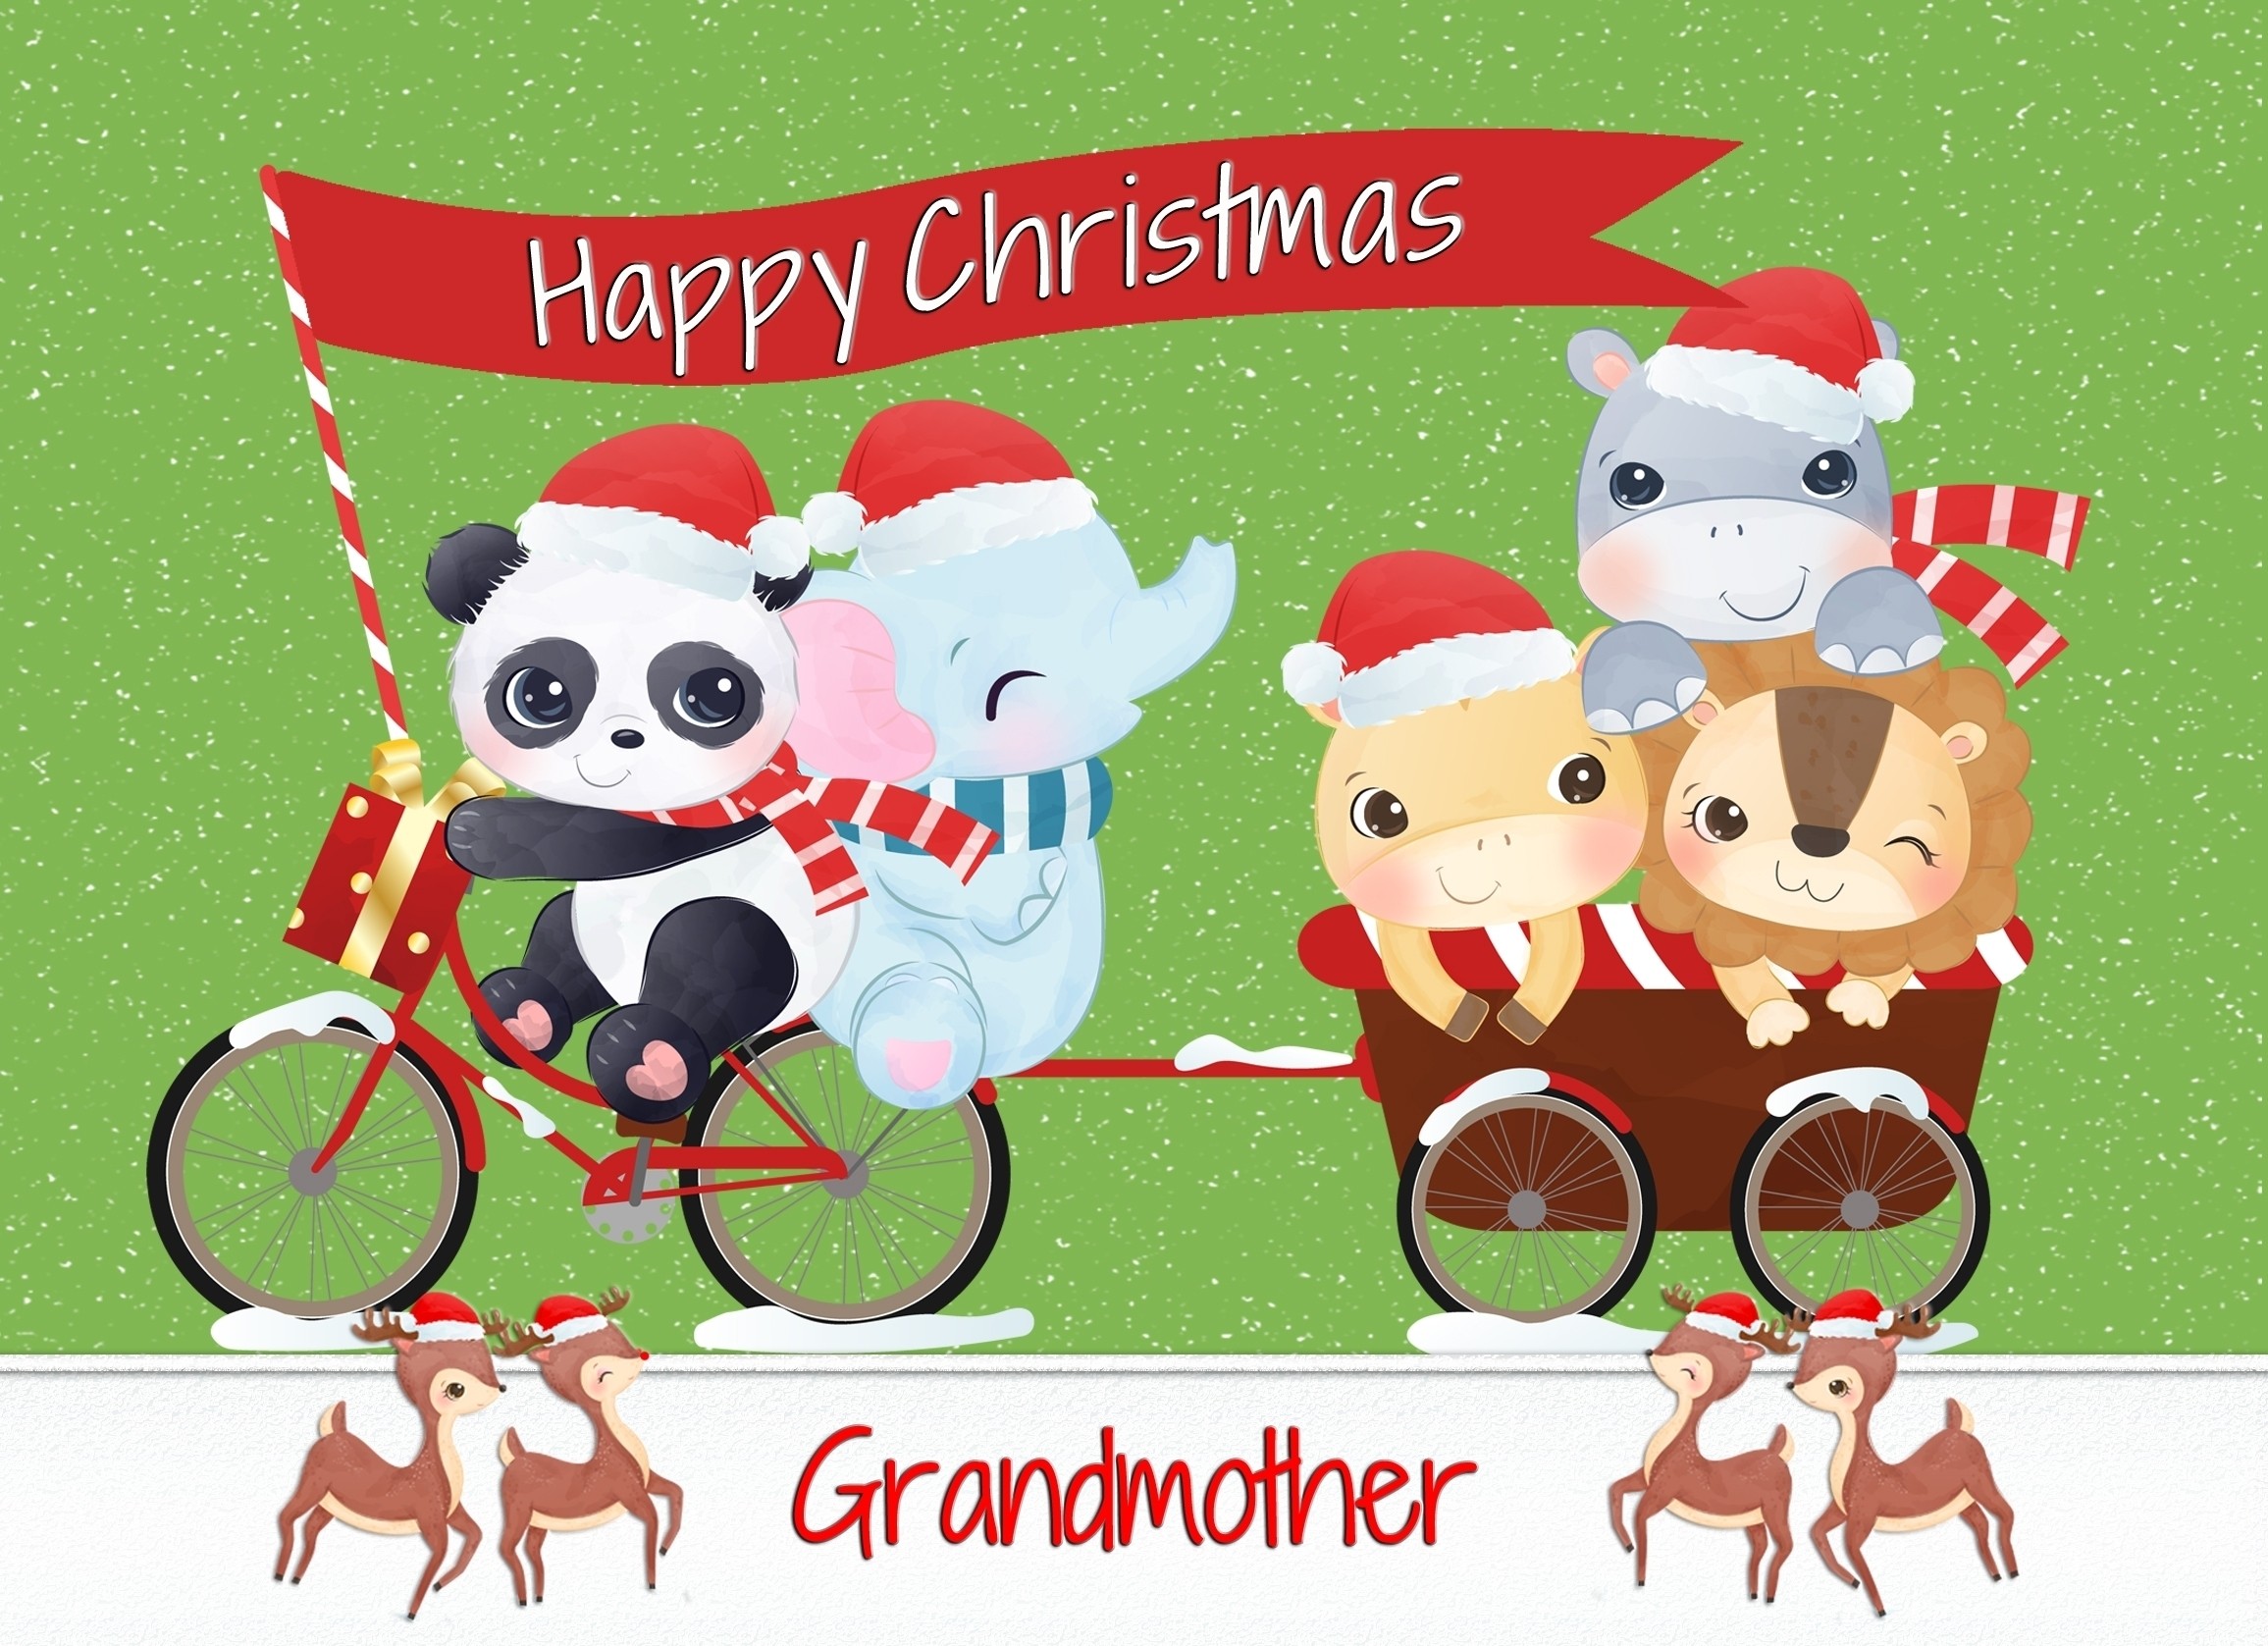 Christmas Card For Grandmother (Green Animals)